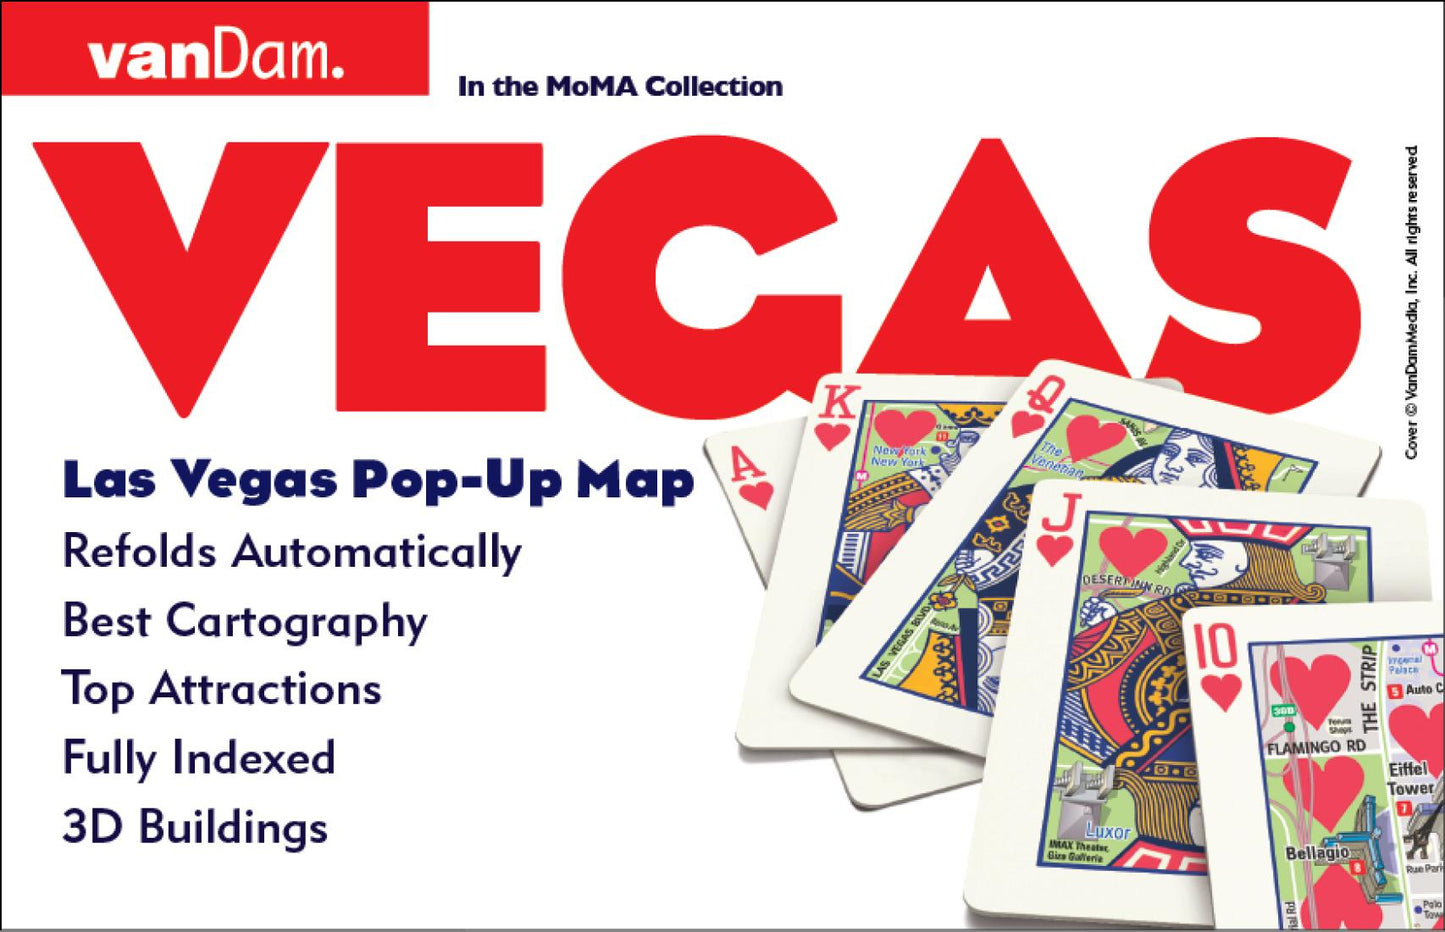 VEGAS : Las Vegas pop-up map